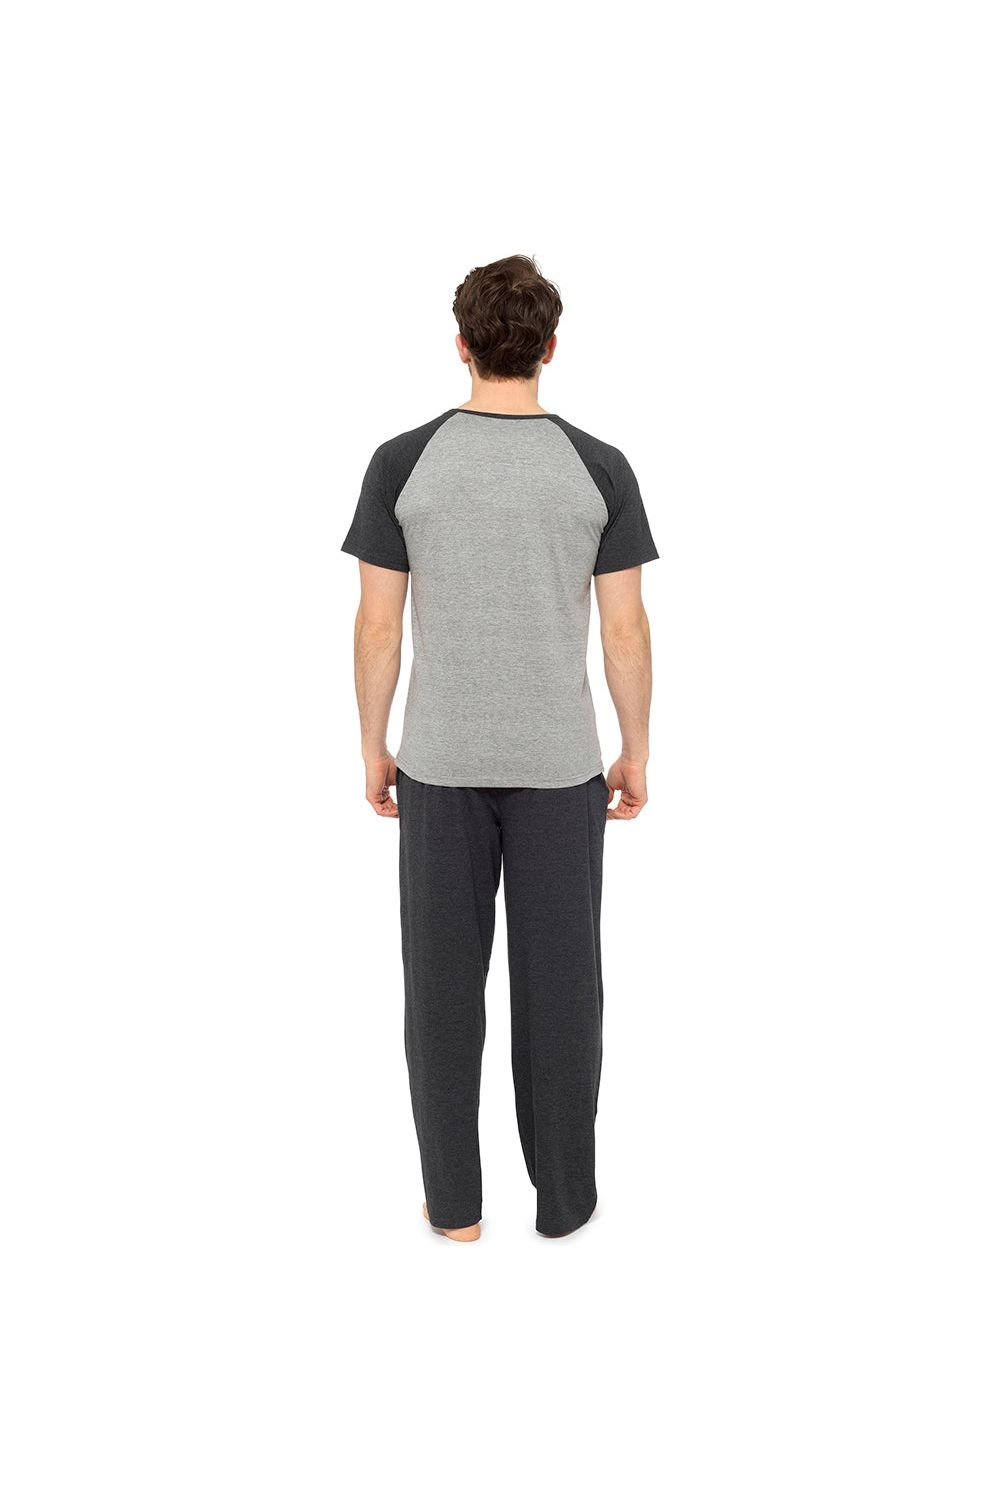 Mens Pocket Jersey Cotton Long Pyjamas - Pyjamas.com